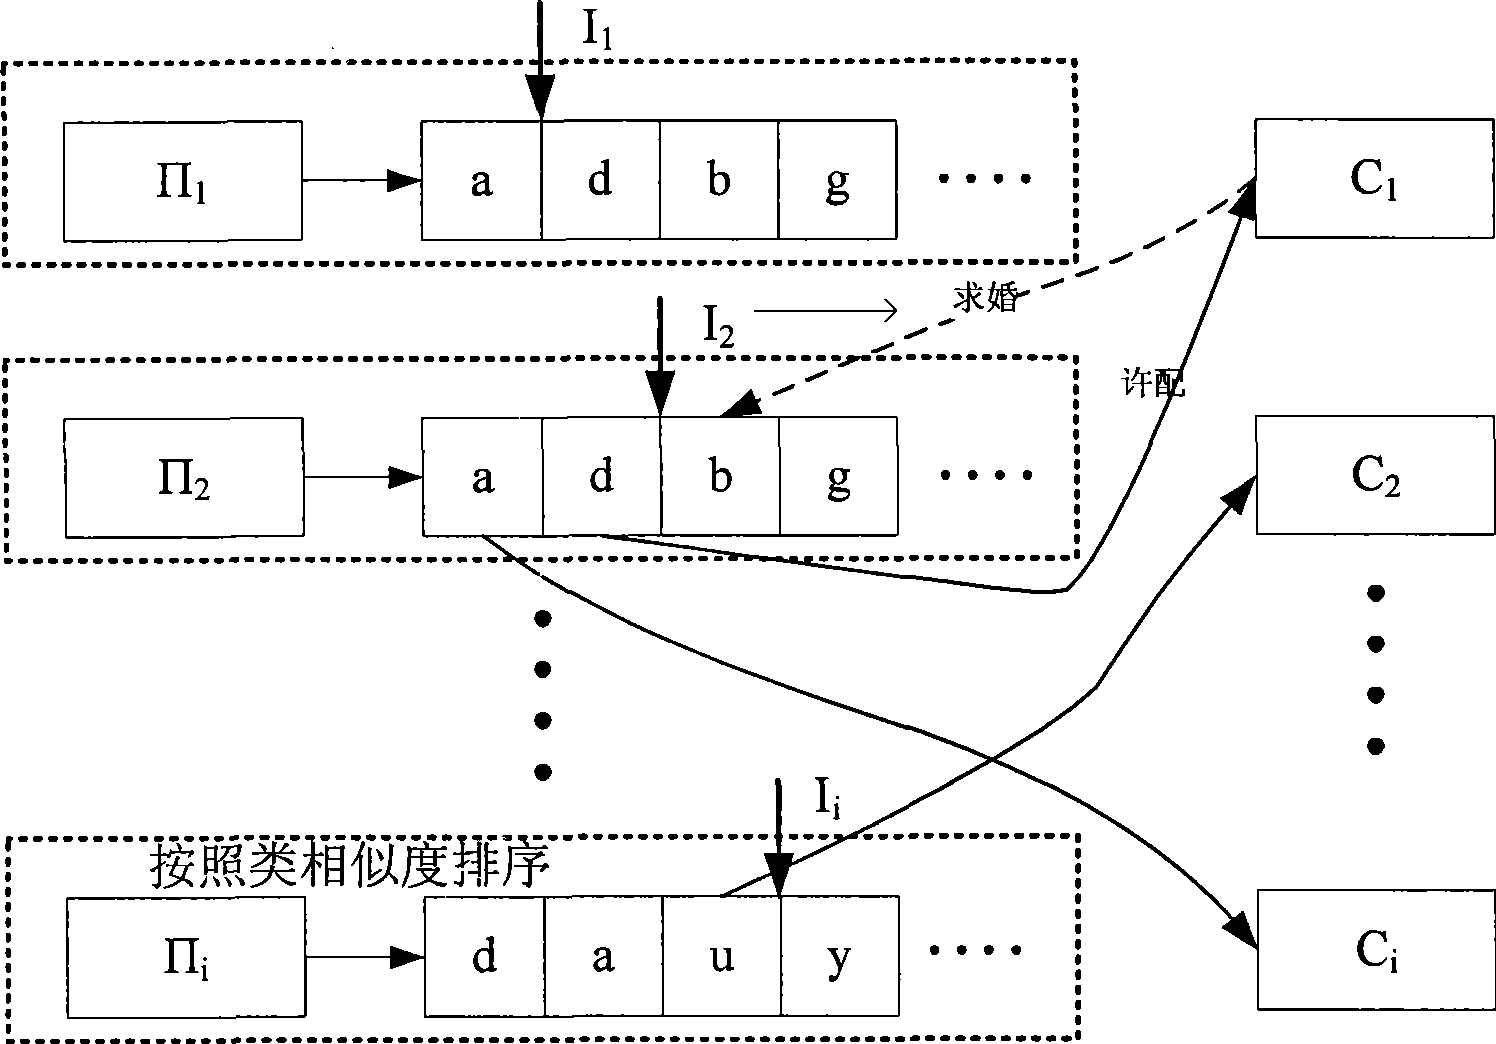 Balance clustering compression method based on data similarity